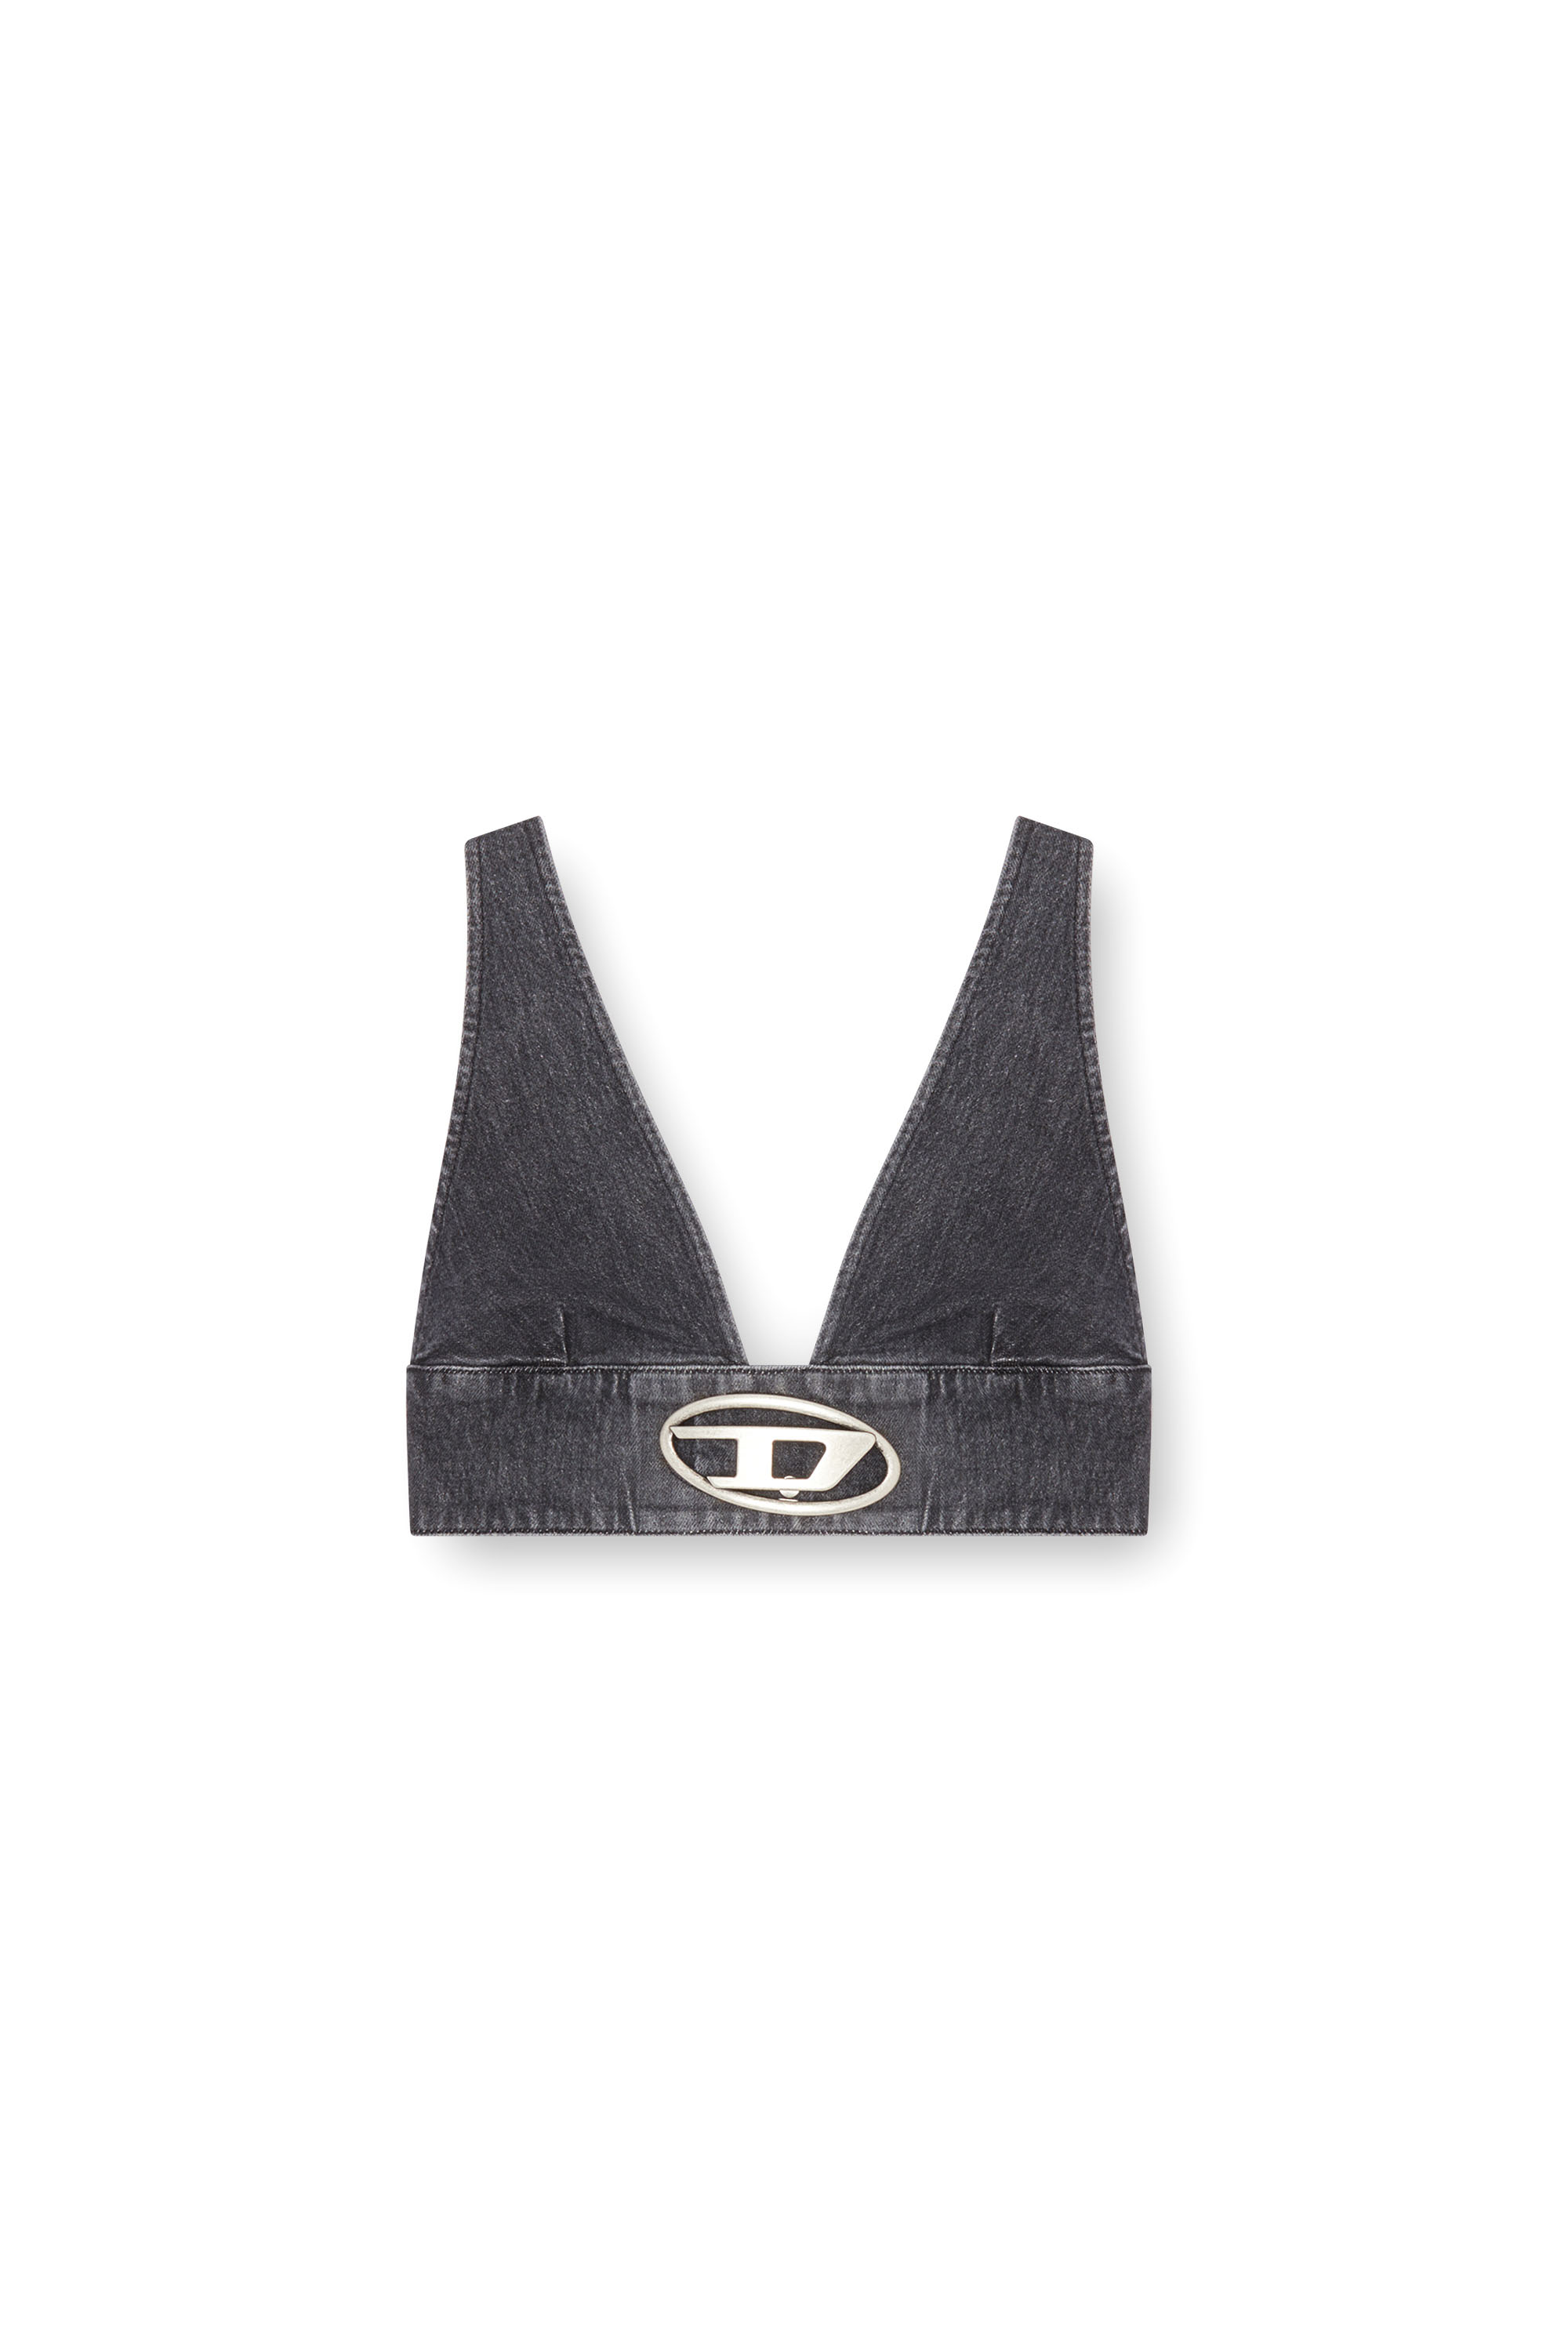 Diesel - DE-ELLY-S, Femme Brassière en denim avec plaque Oval D in Noir - Image 4